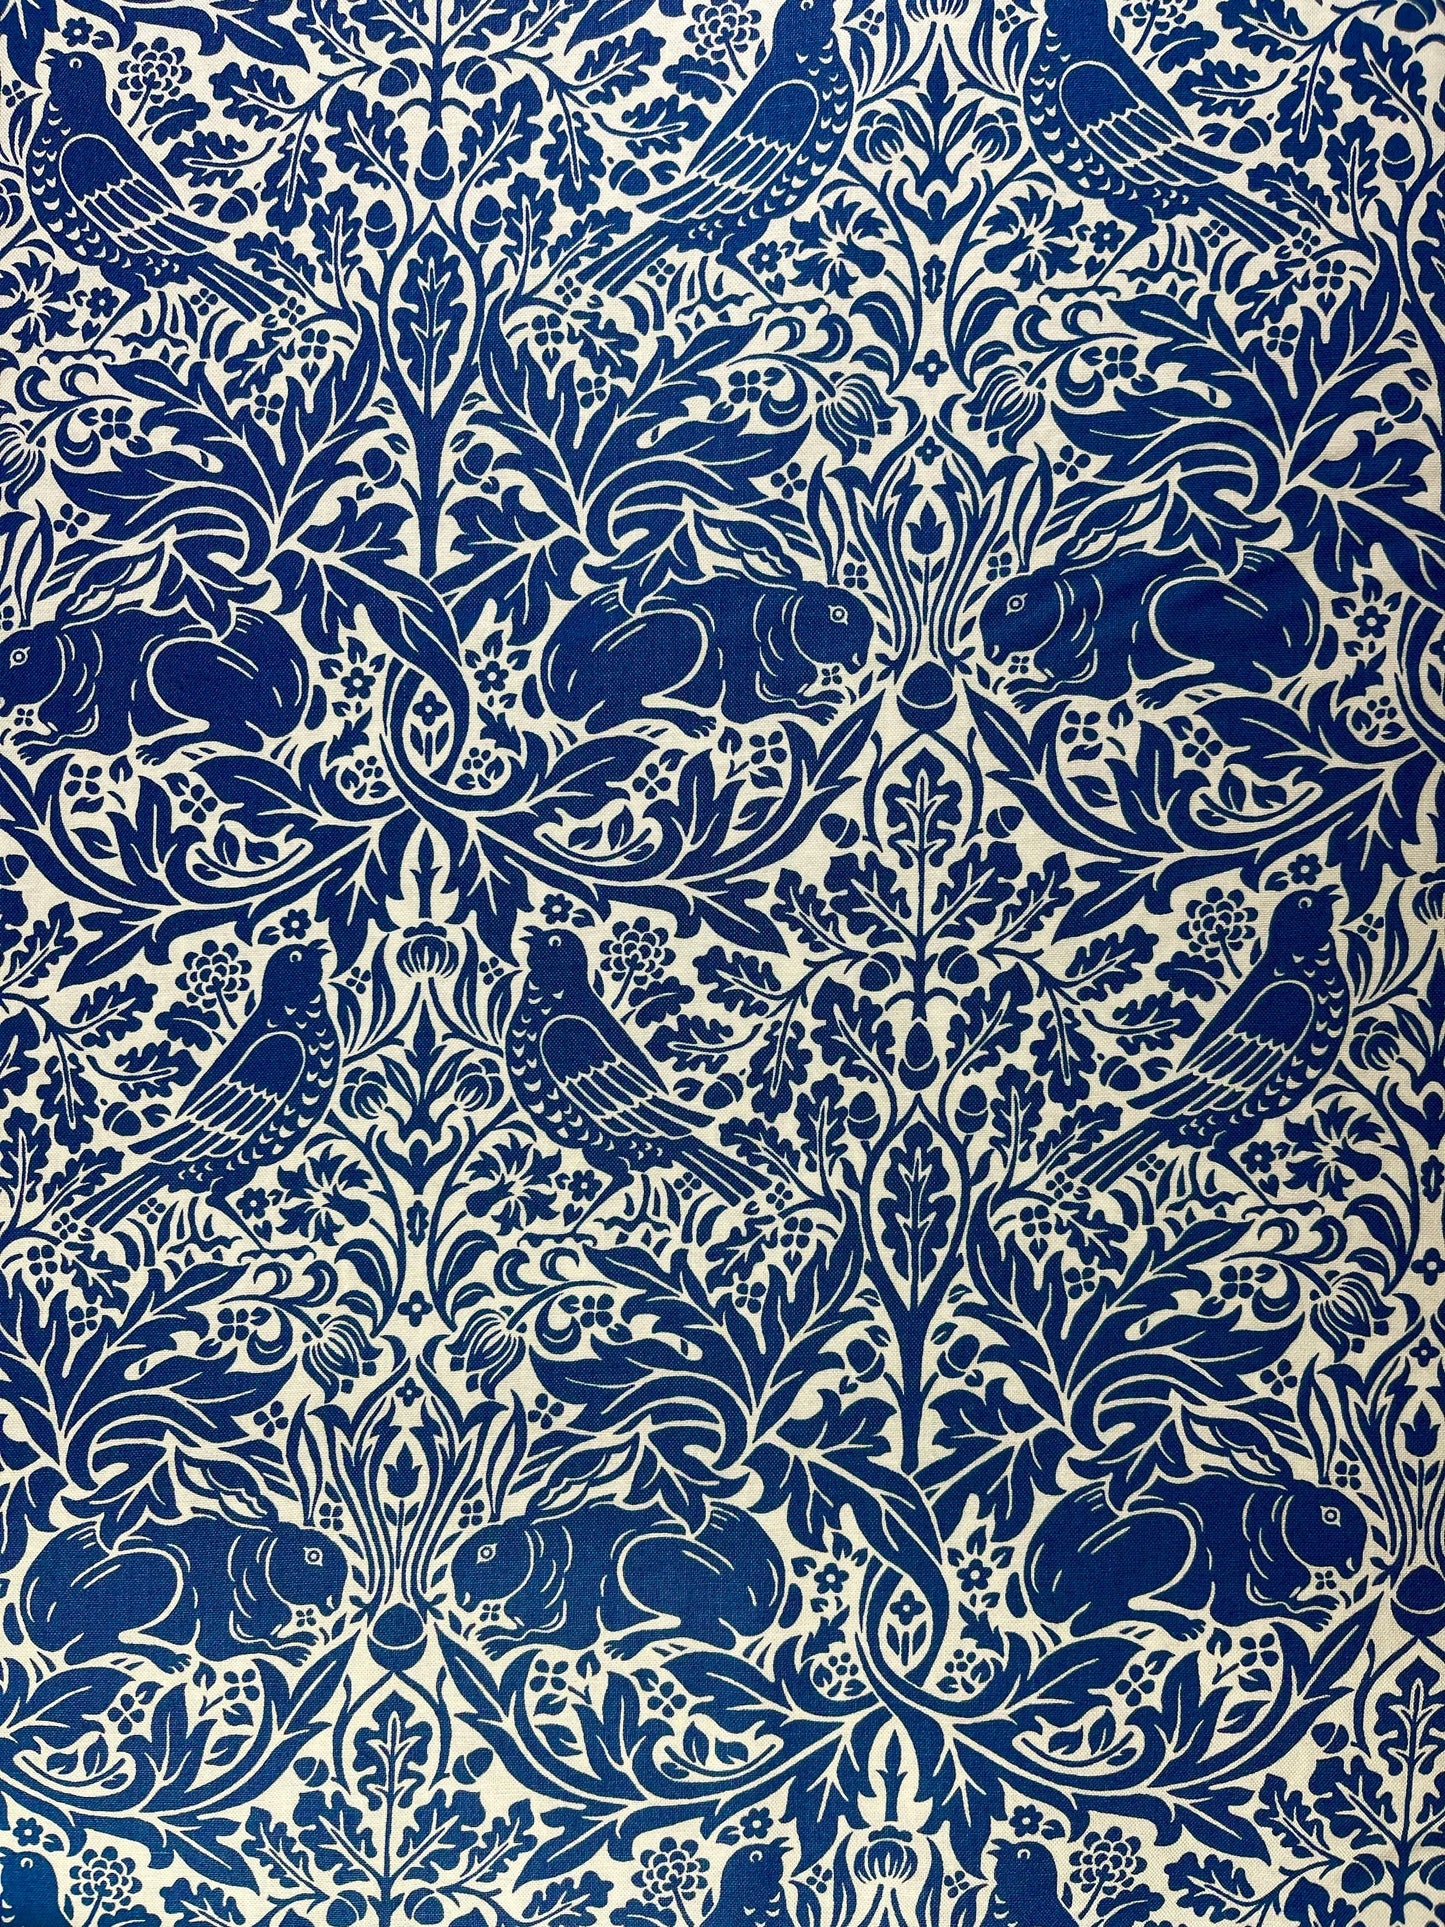 Brer Rabbit Blue PWWM026 WANDLE, Free Spirit Fabrics, William Morris, Quilt Fabric, Cotton Fabric, The Original Morris,, Fabric By The Yard